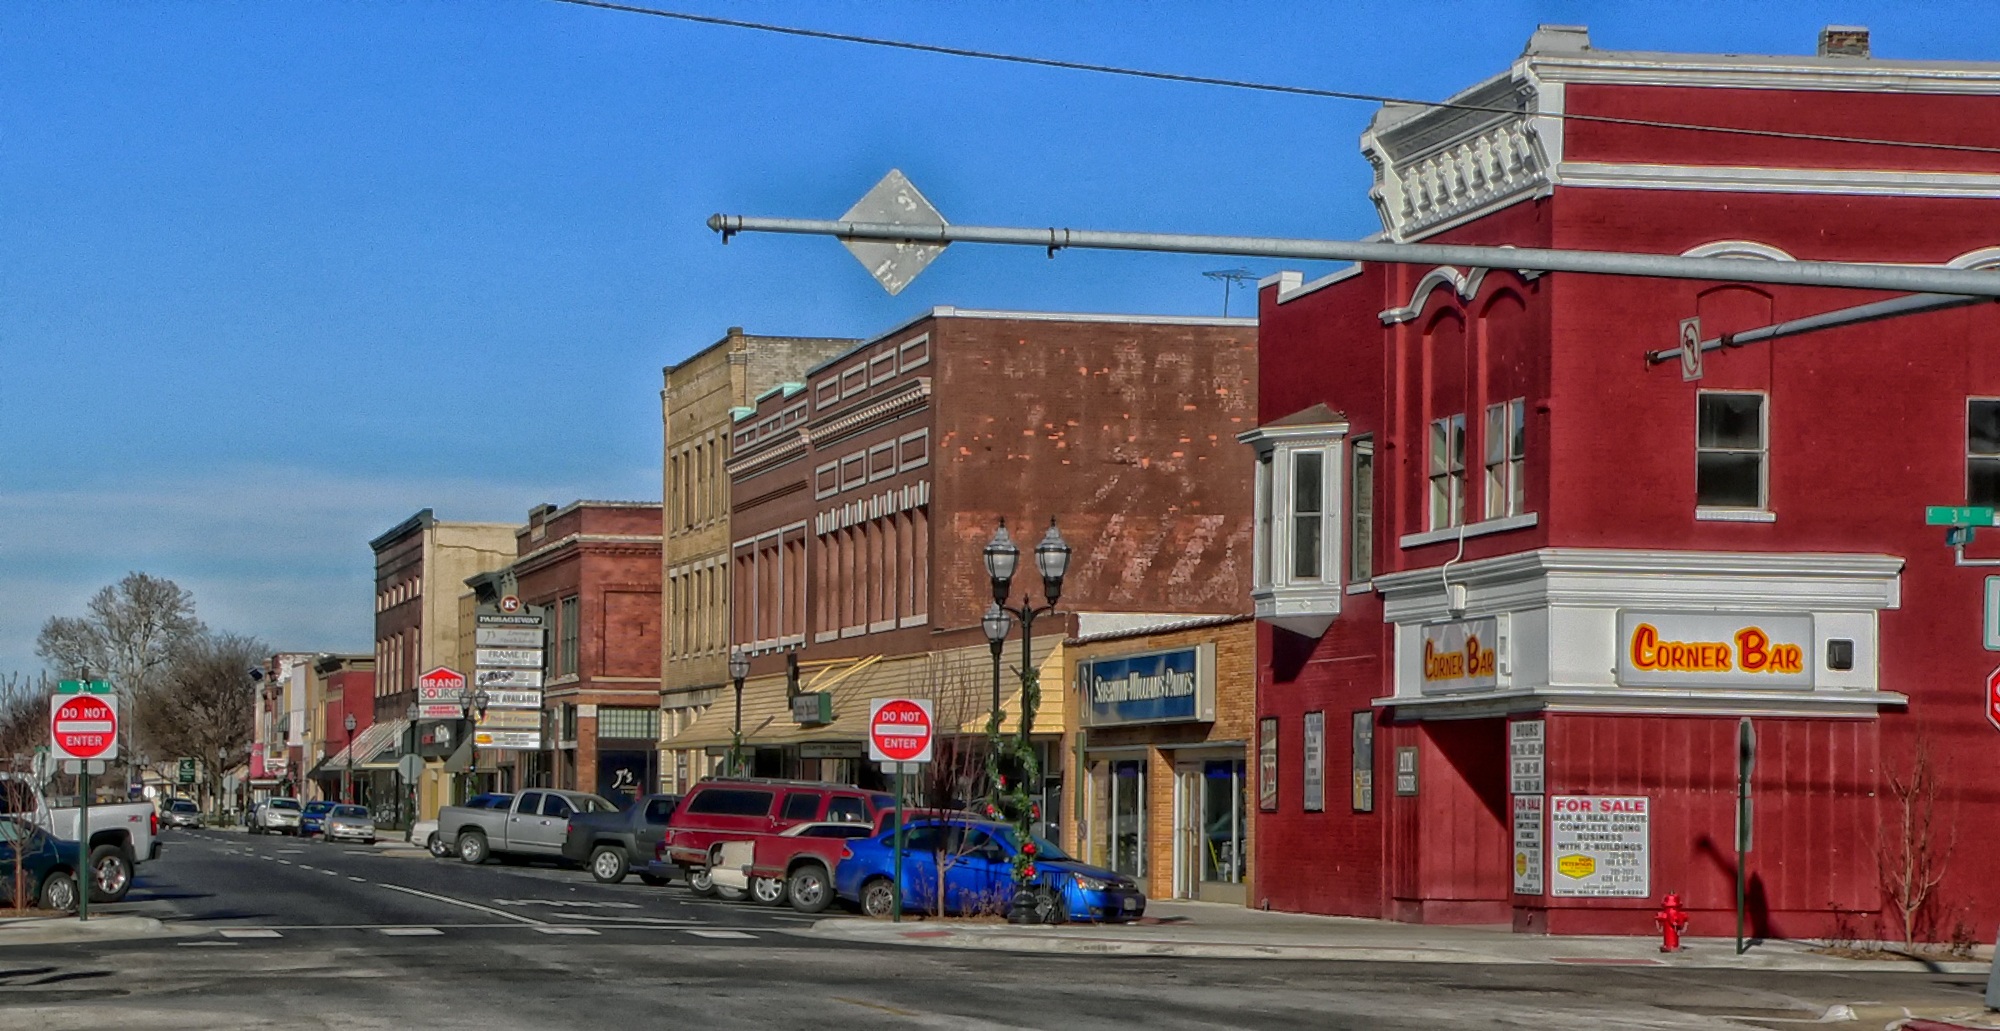 Fremont Nebraska Town free image download